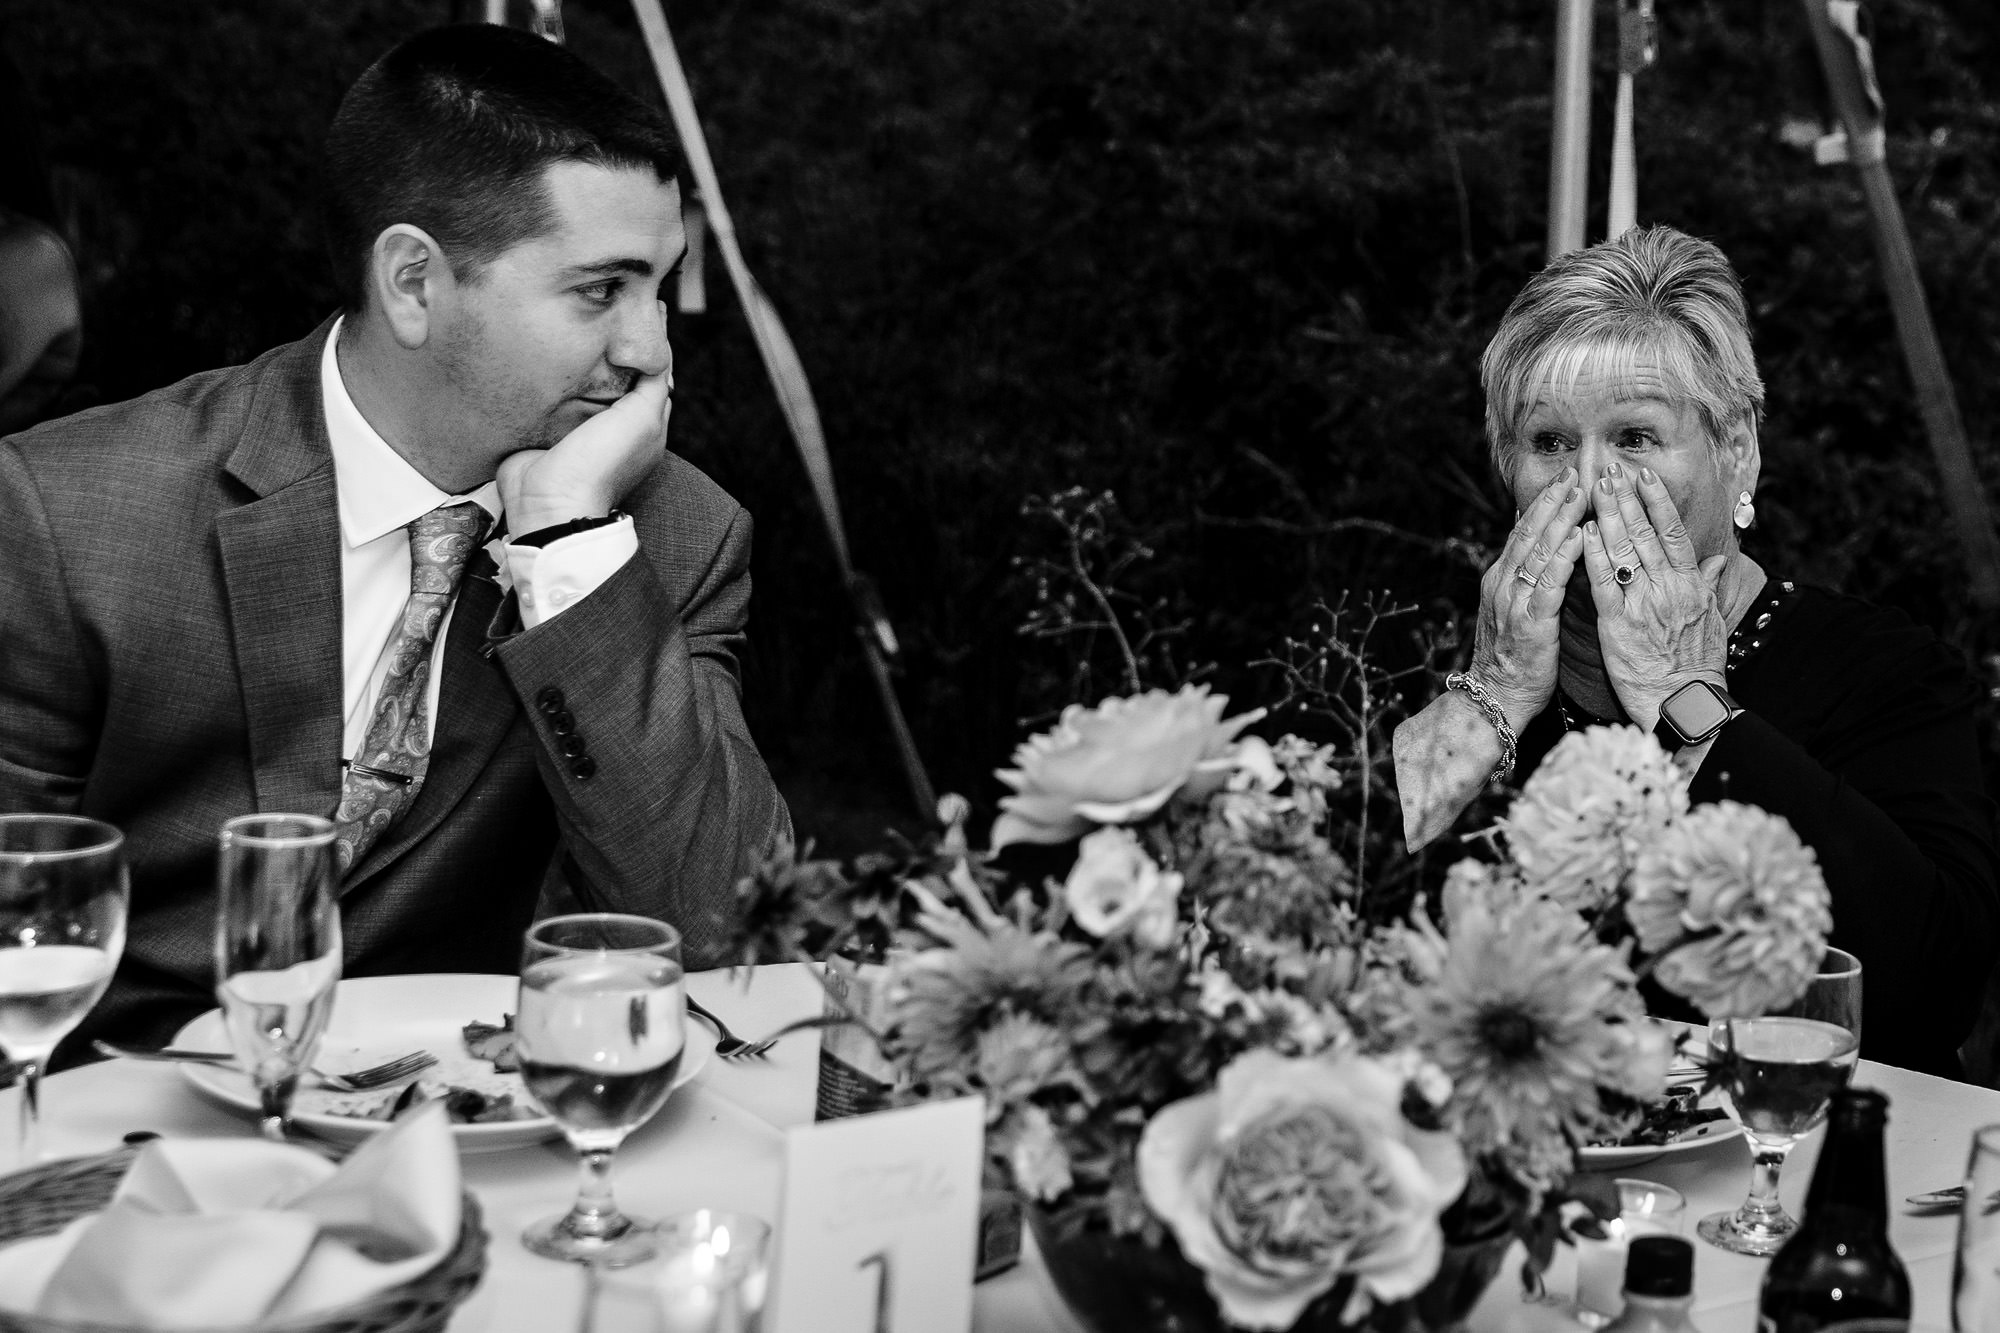 Emotional toasts at a midcoast Maine wedding